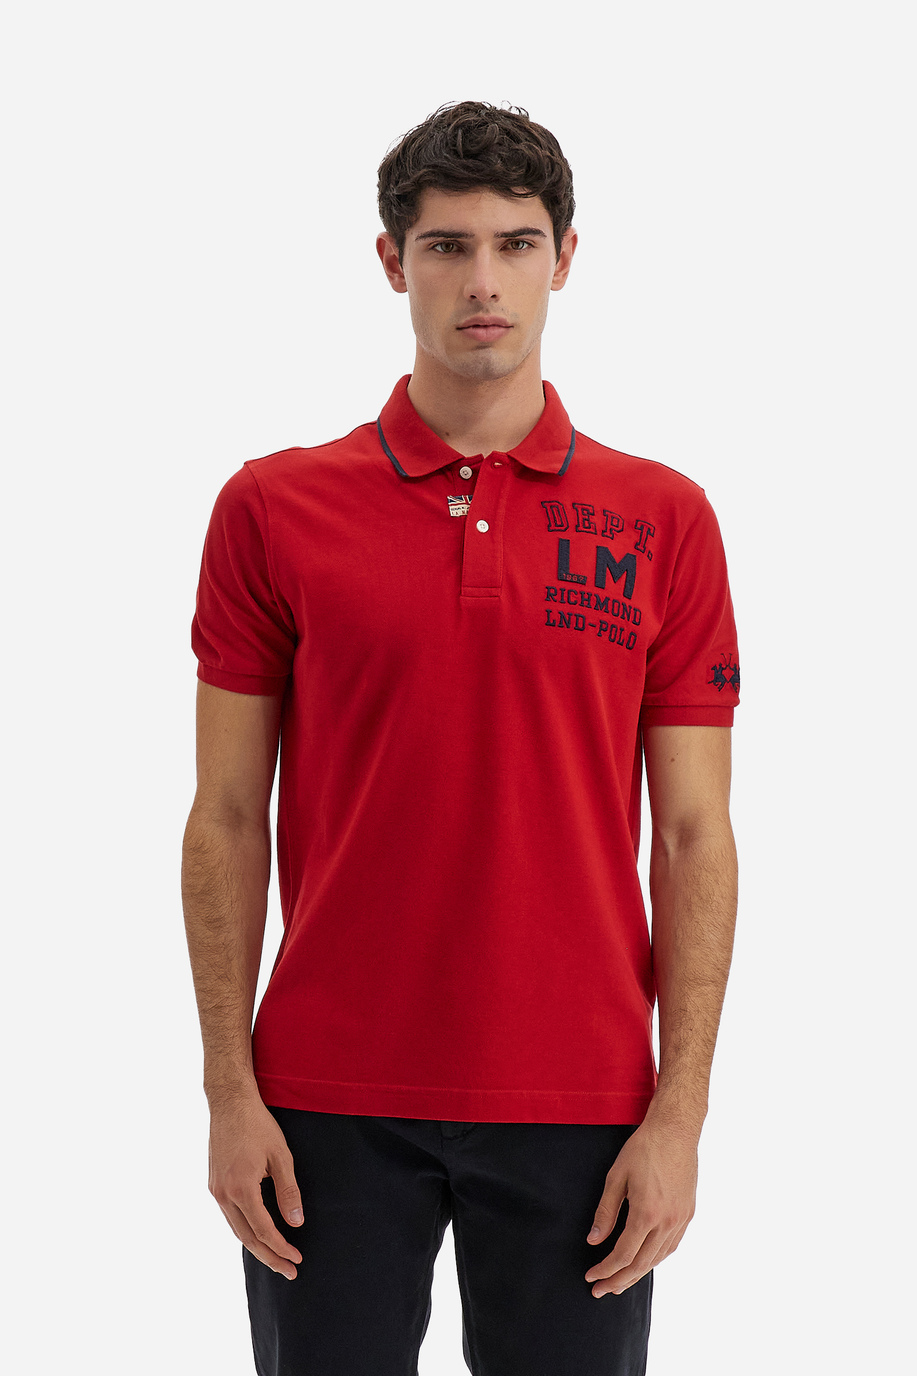 Men's short-sleeved polo shirt Polo Academy solid color small logo on shoulder - Vardon - Regular fit | La Martina - Official Online Shop